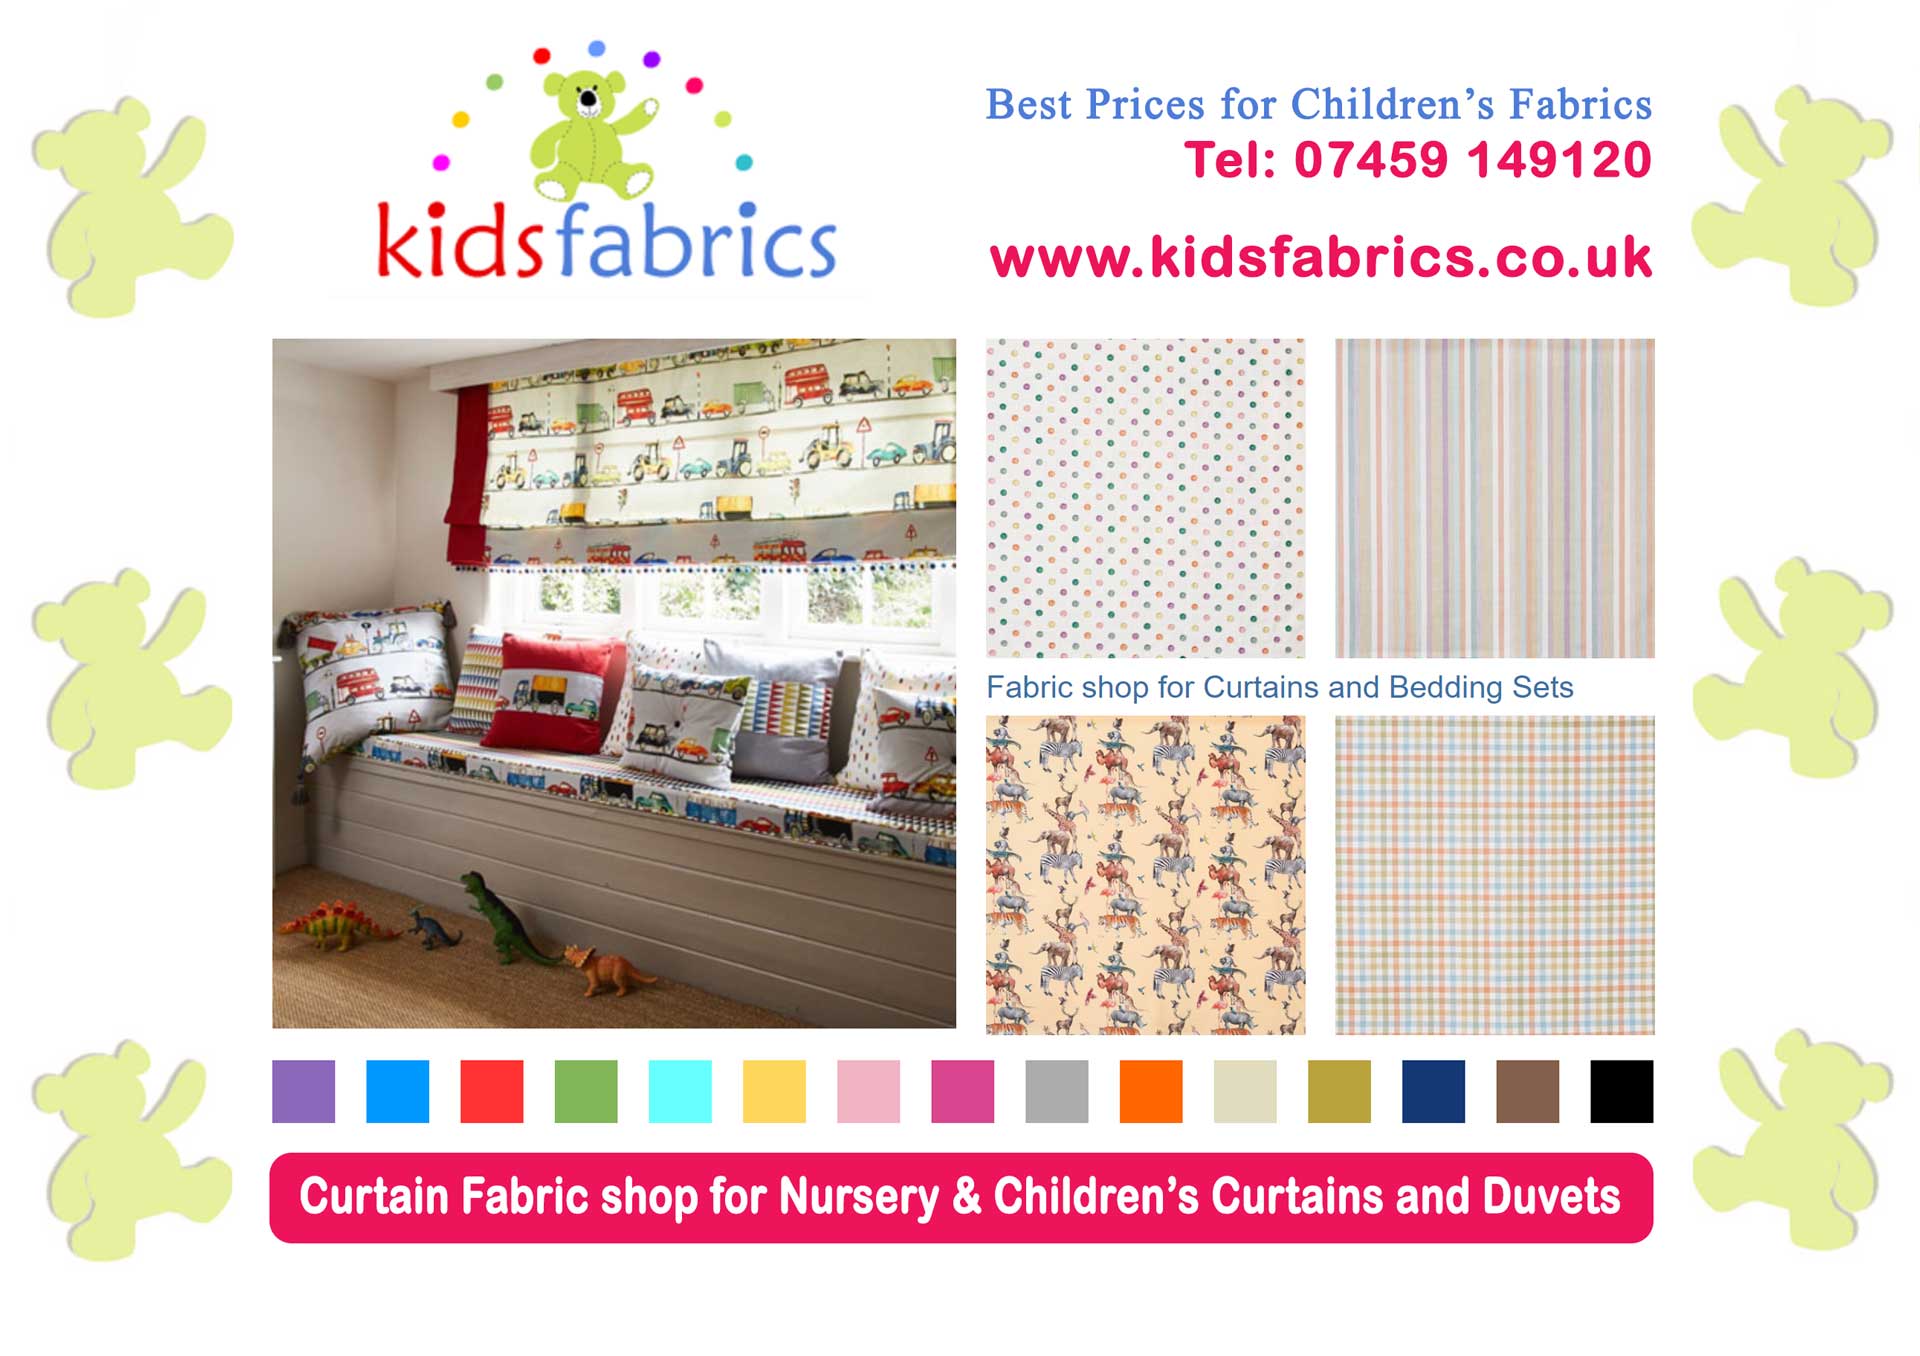 (c) Kidsfabrics.co.uk